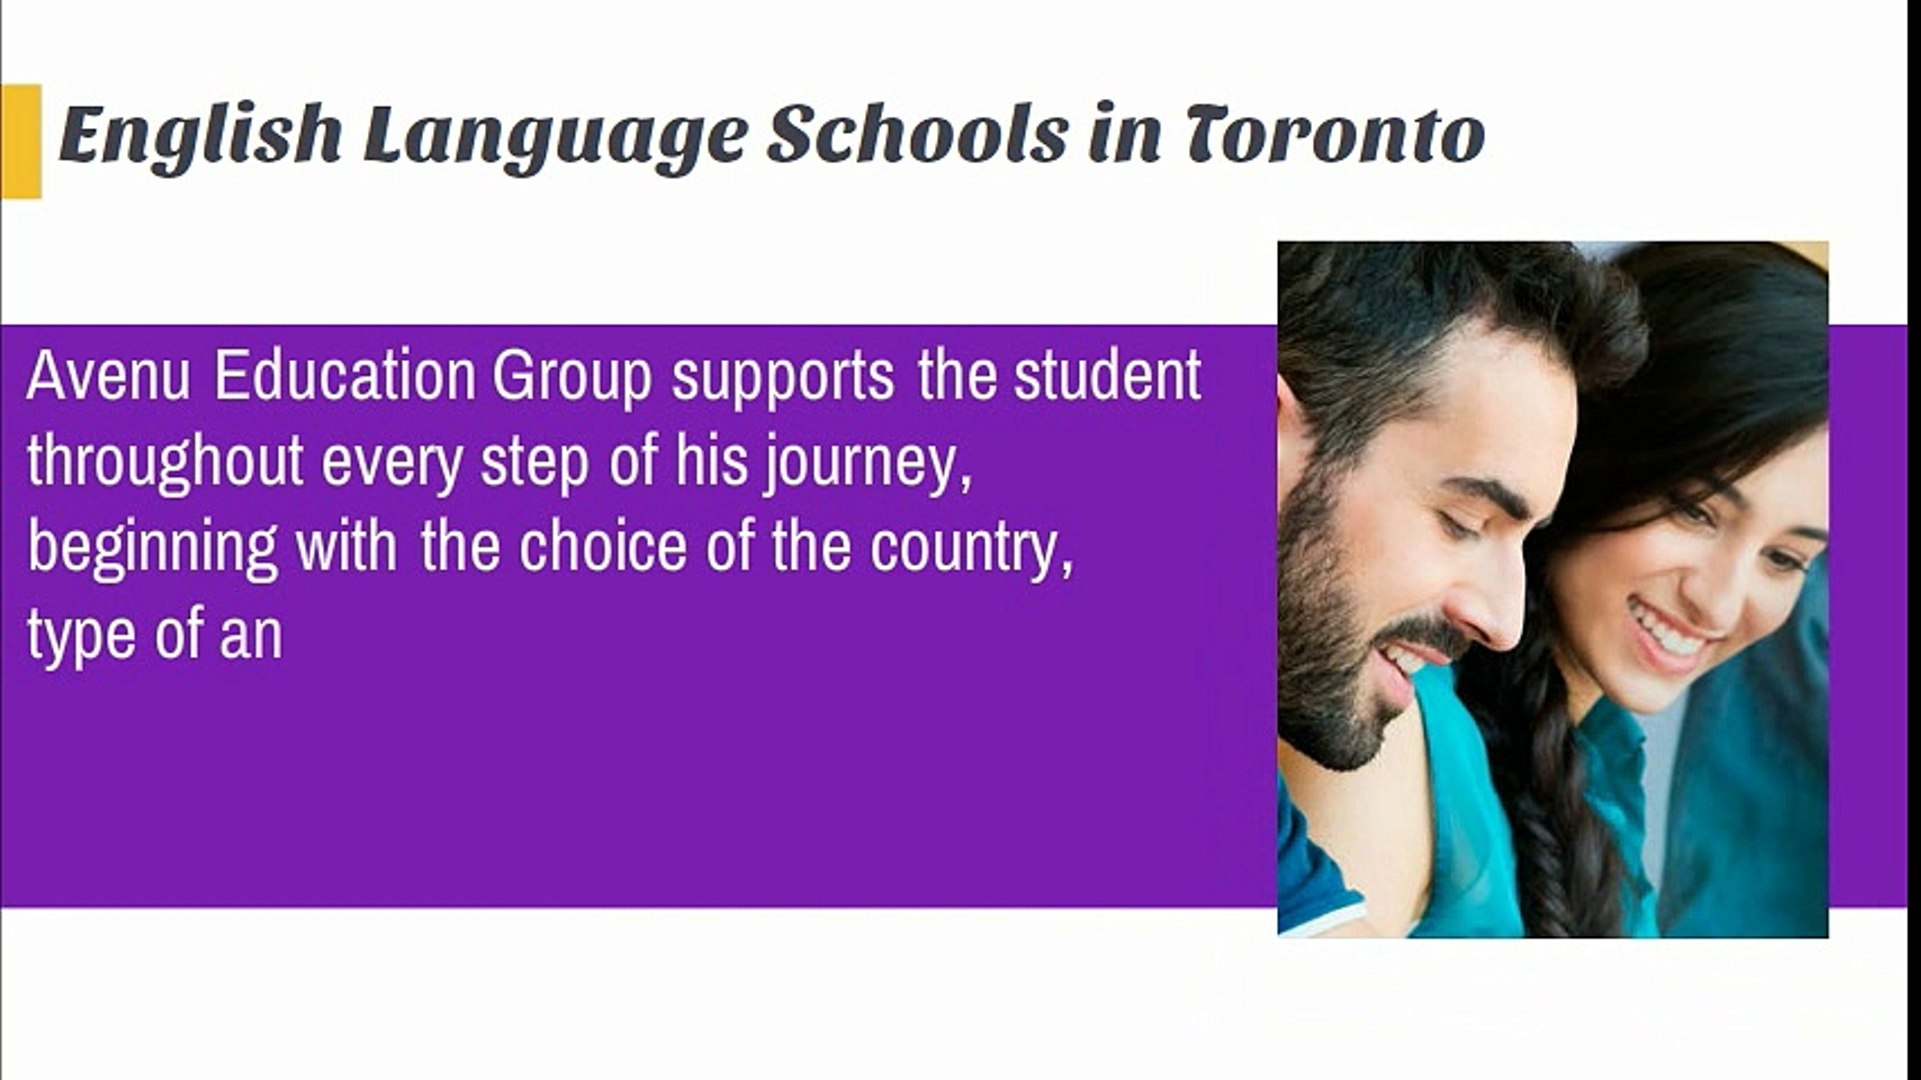 English Language Schools in Toronto – Avenue Education